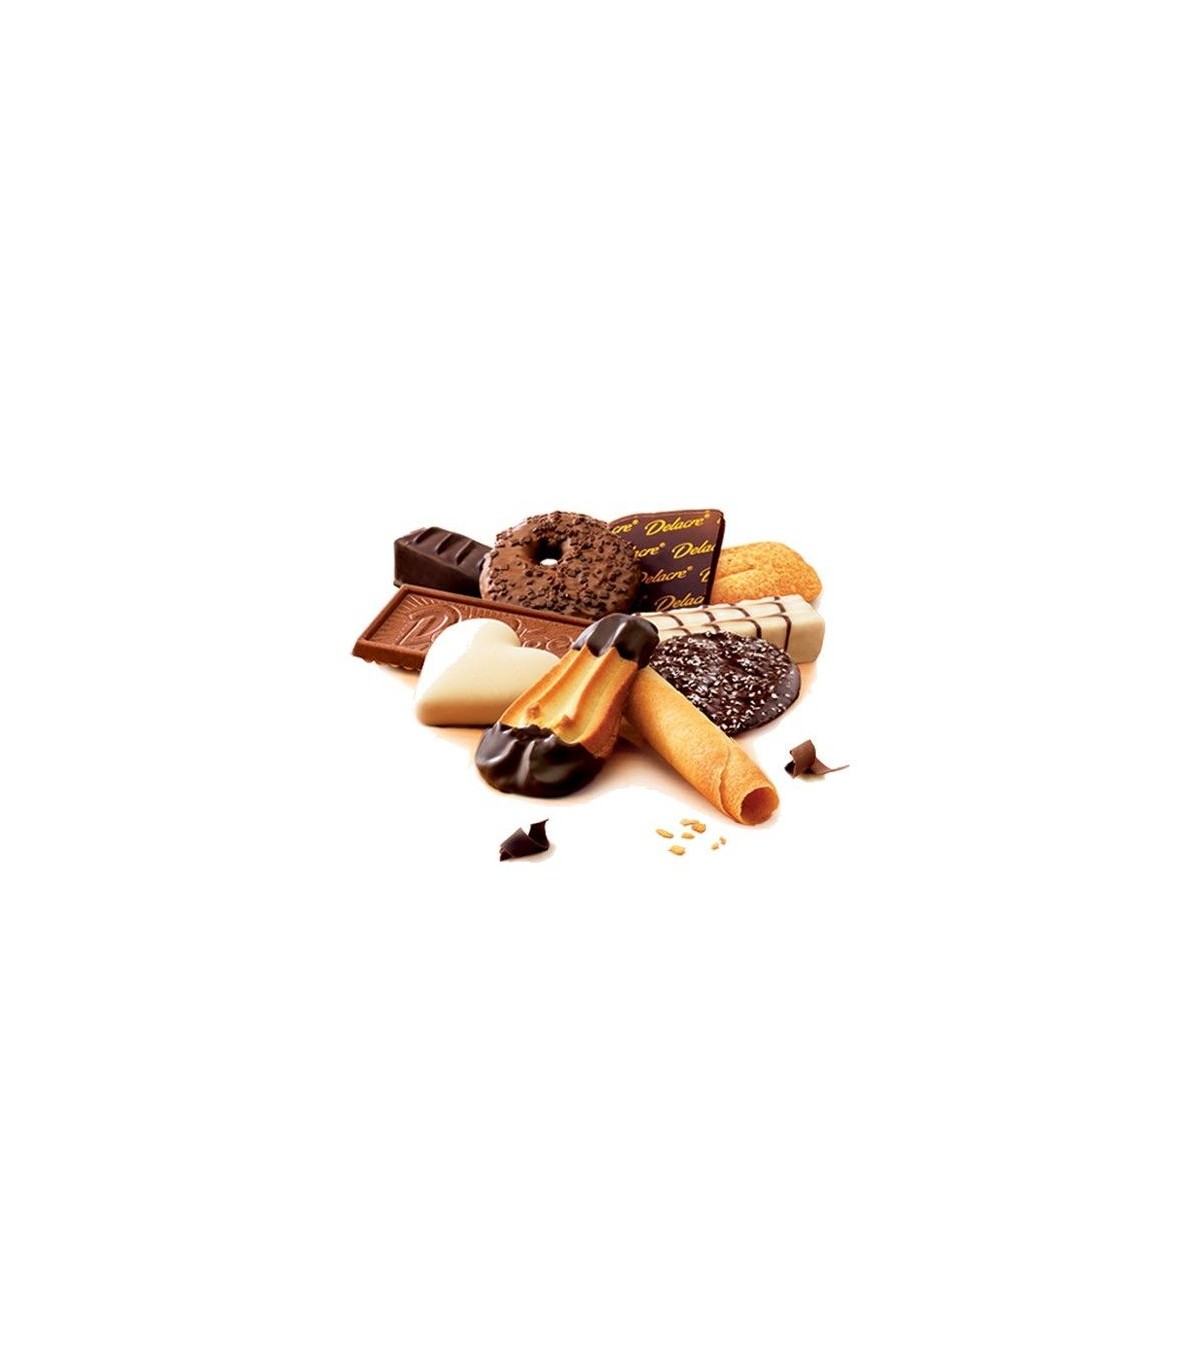 Assortiment chocolats belges 'Selection' 500 G - Délicieux chocolat belge